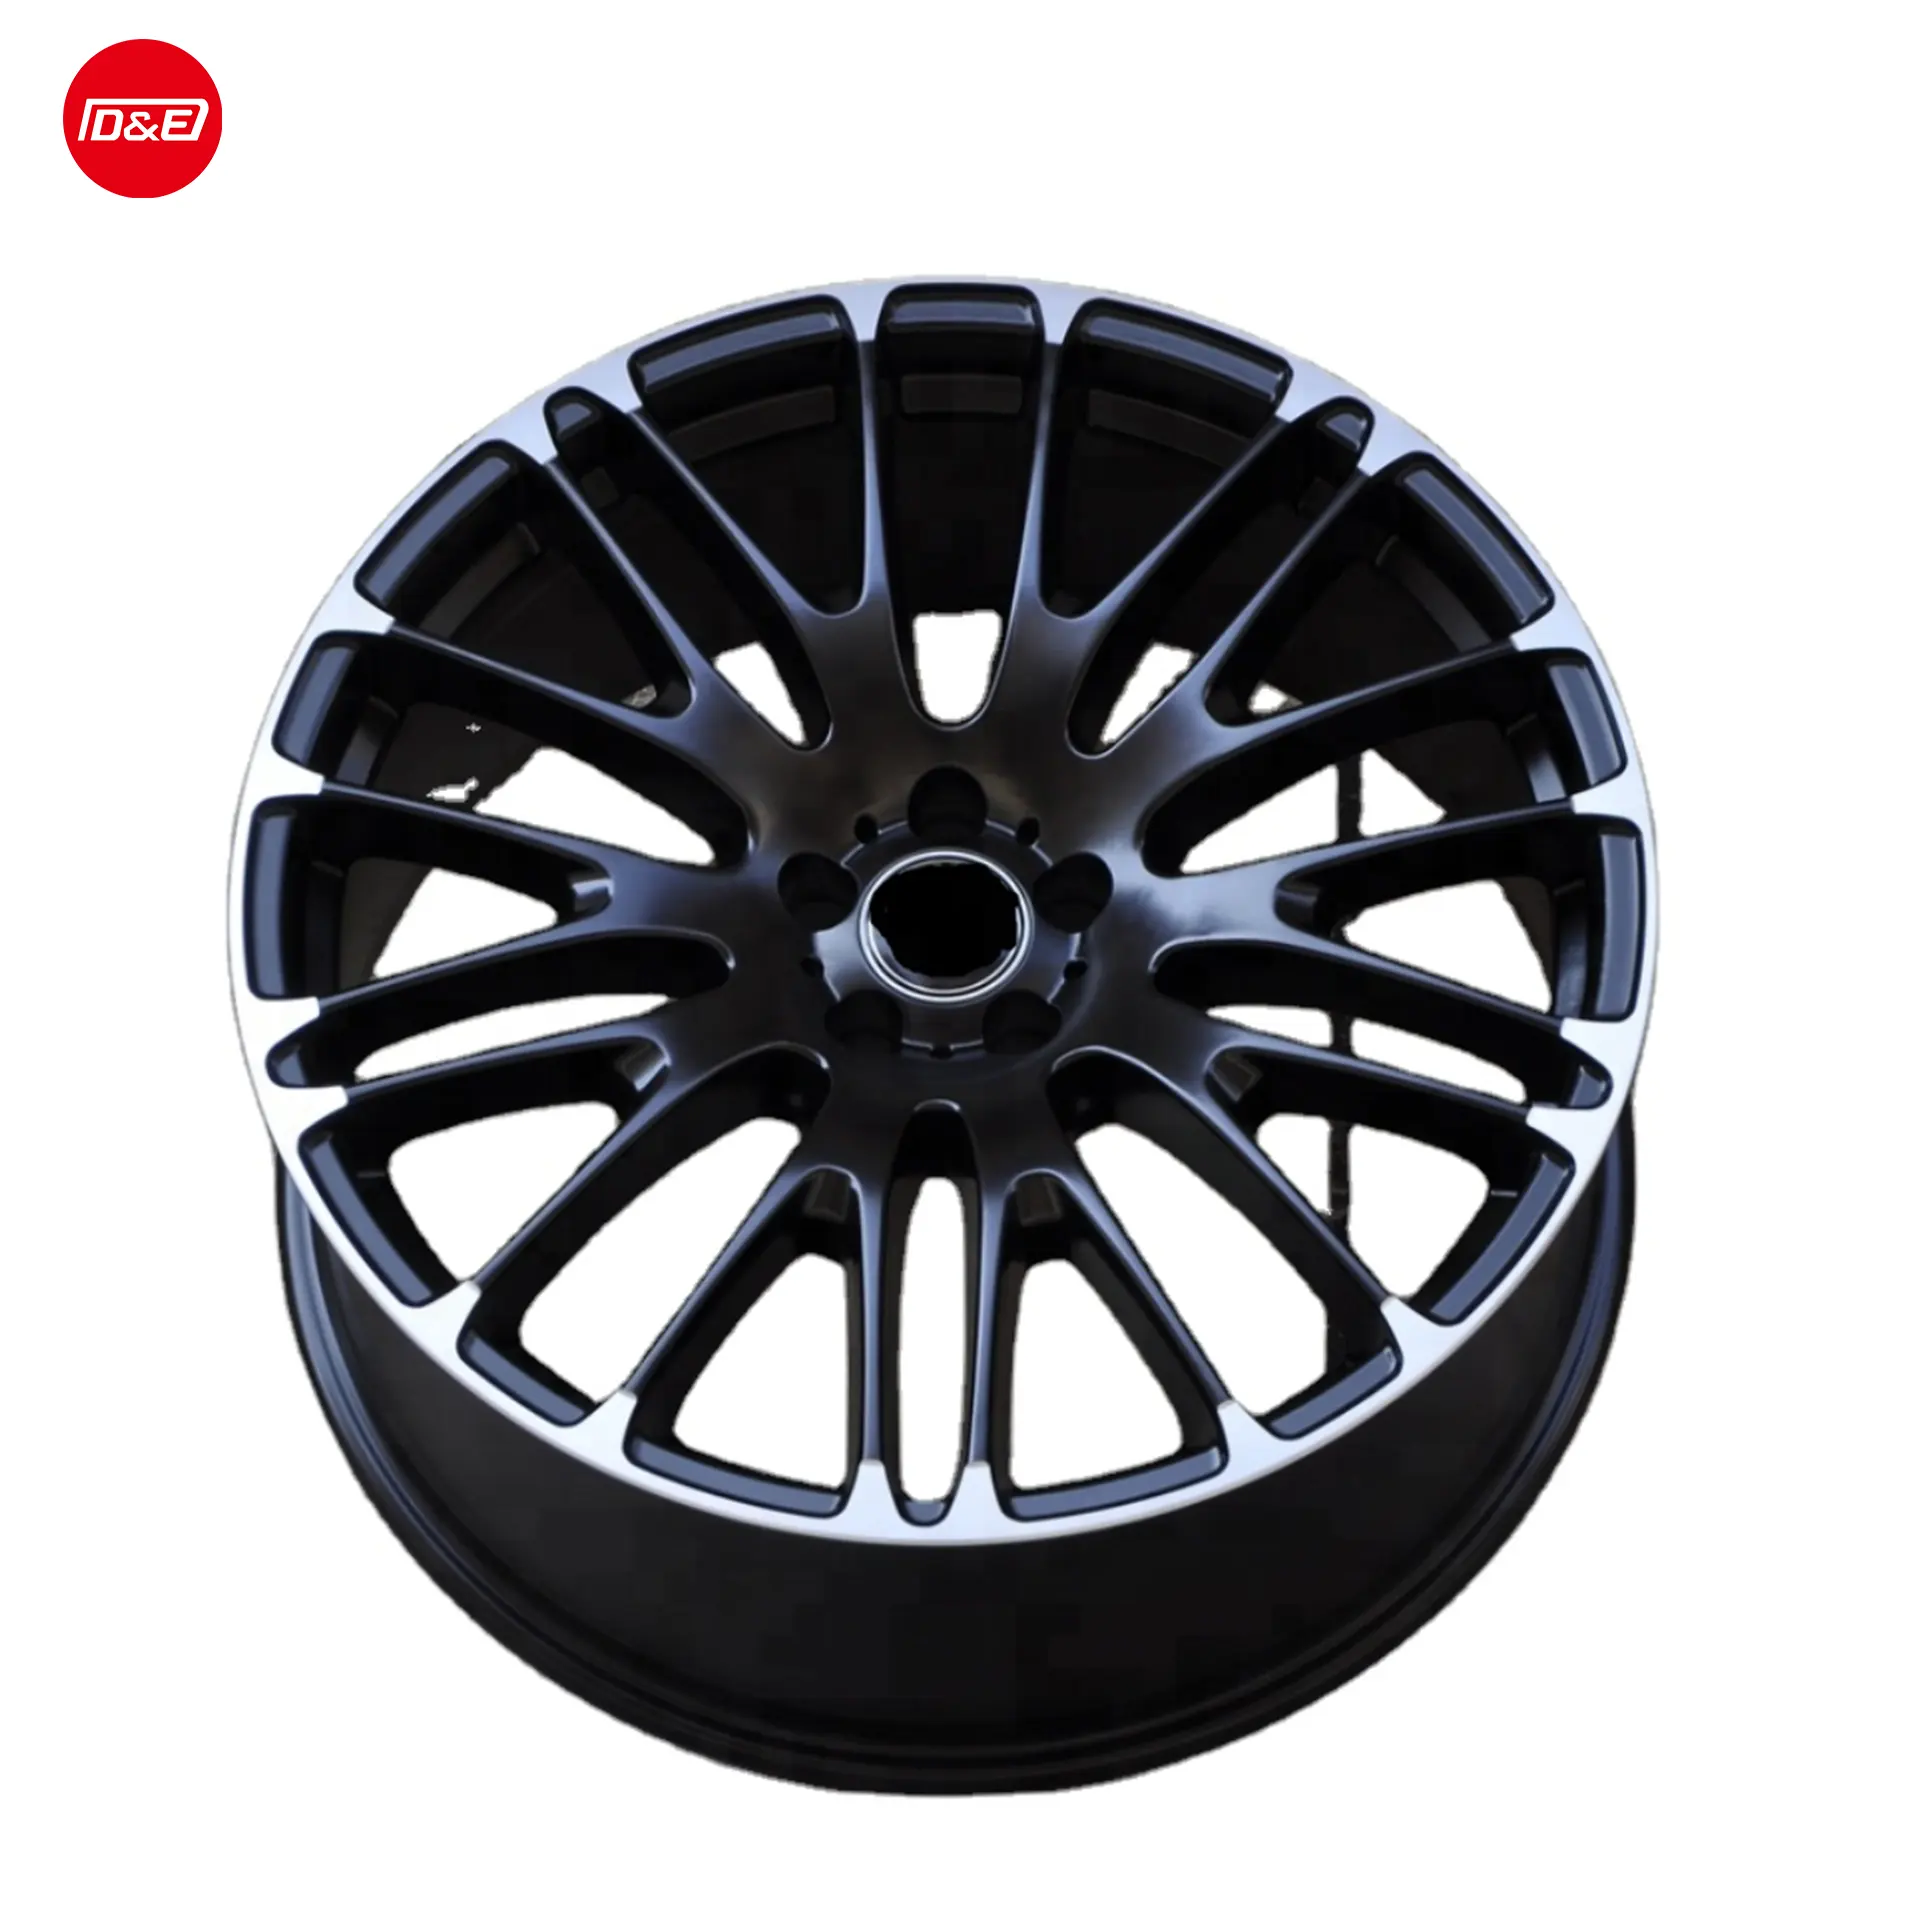 20"*8.5/20"*10 Size ,Car Alloy/Aluminium Wheel Rims for European car,with high performance